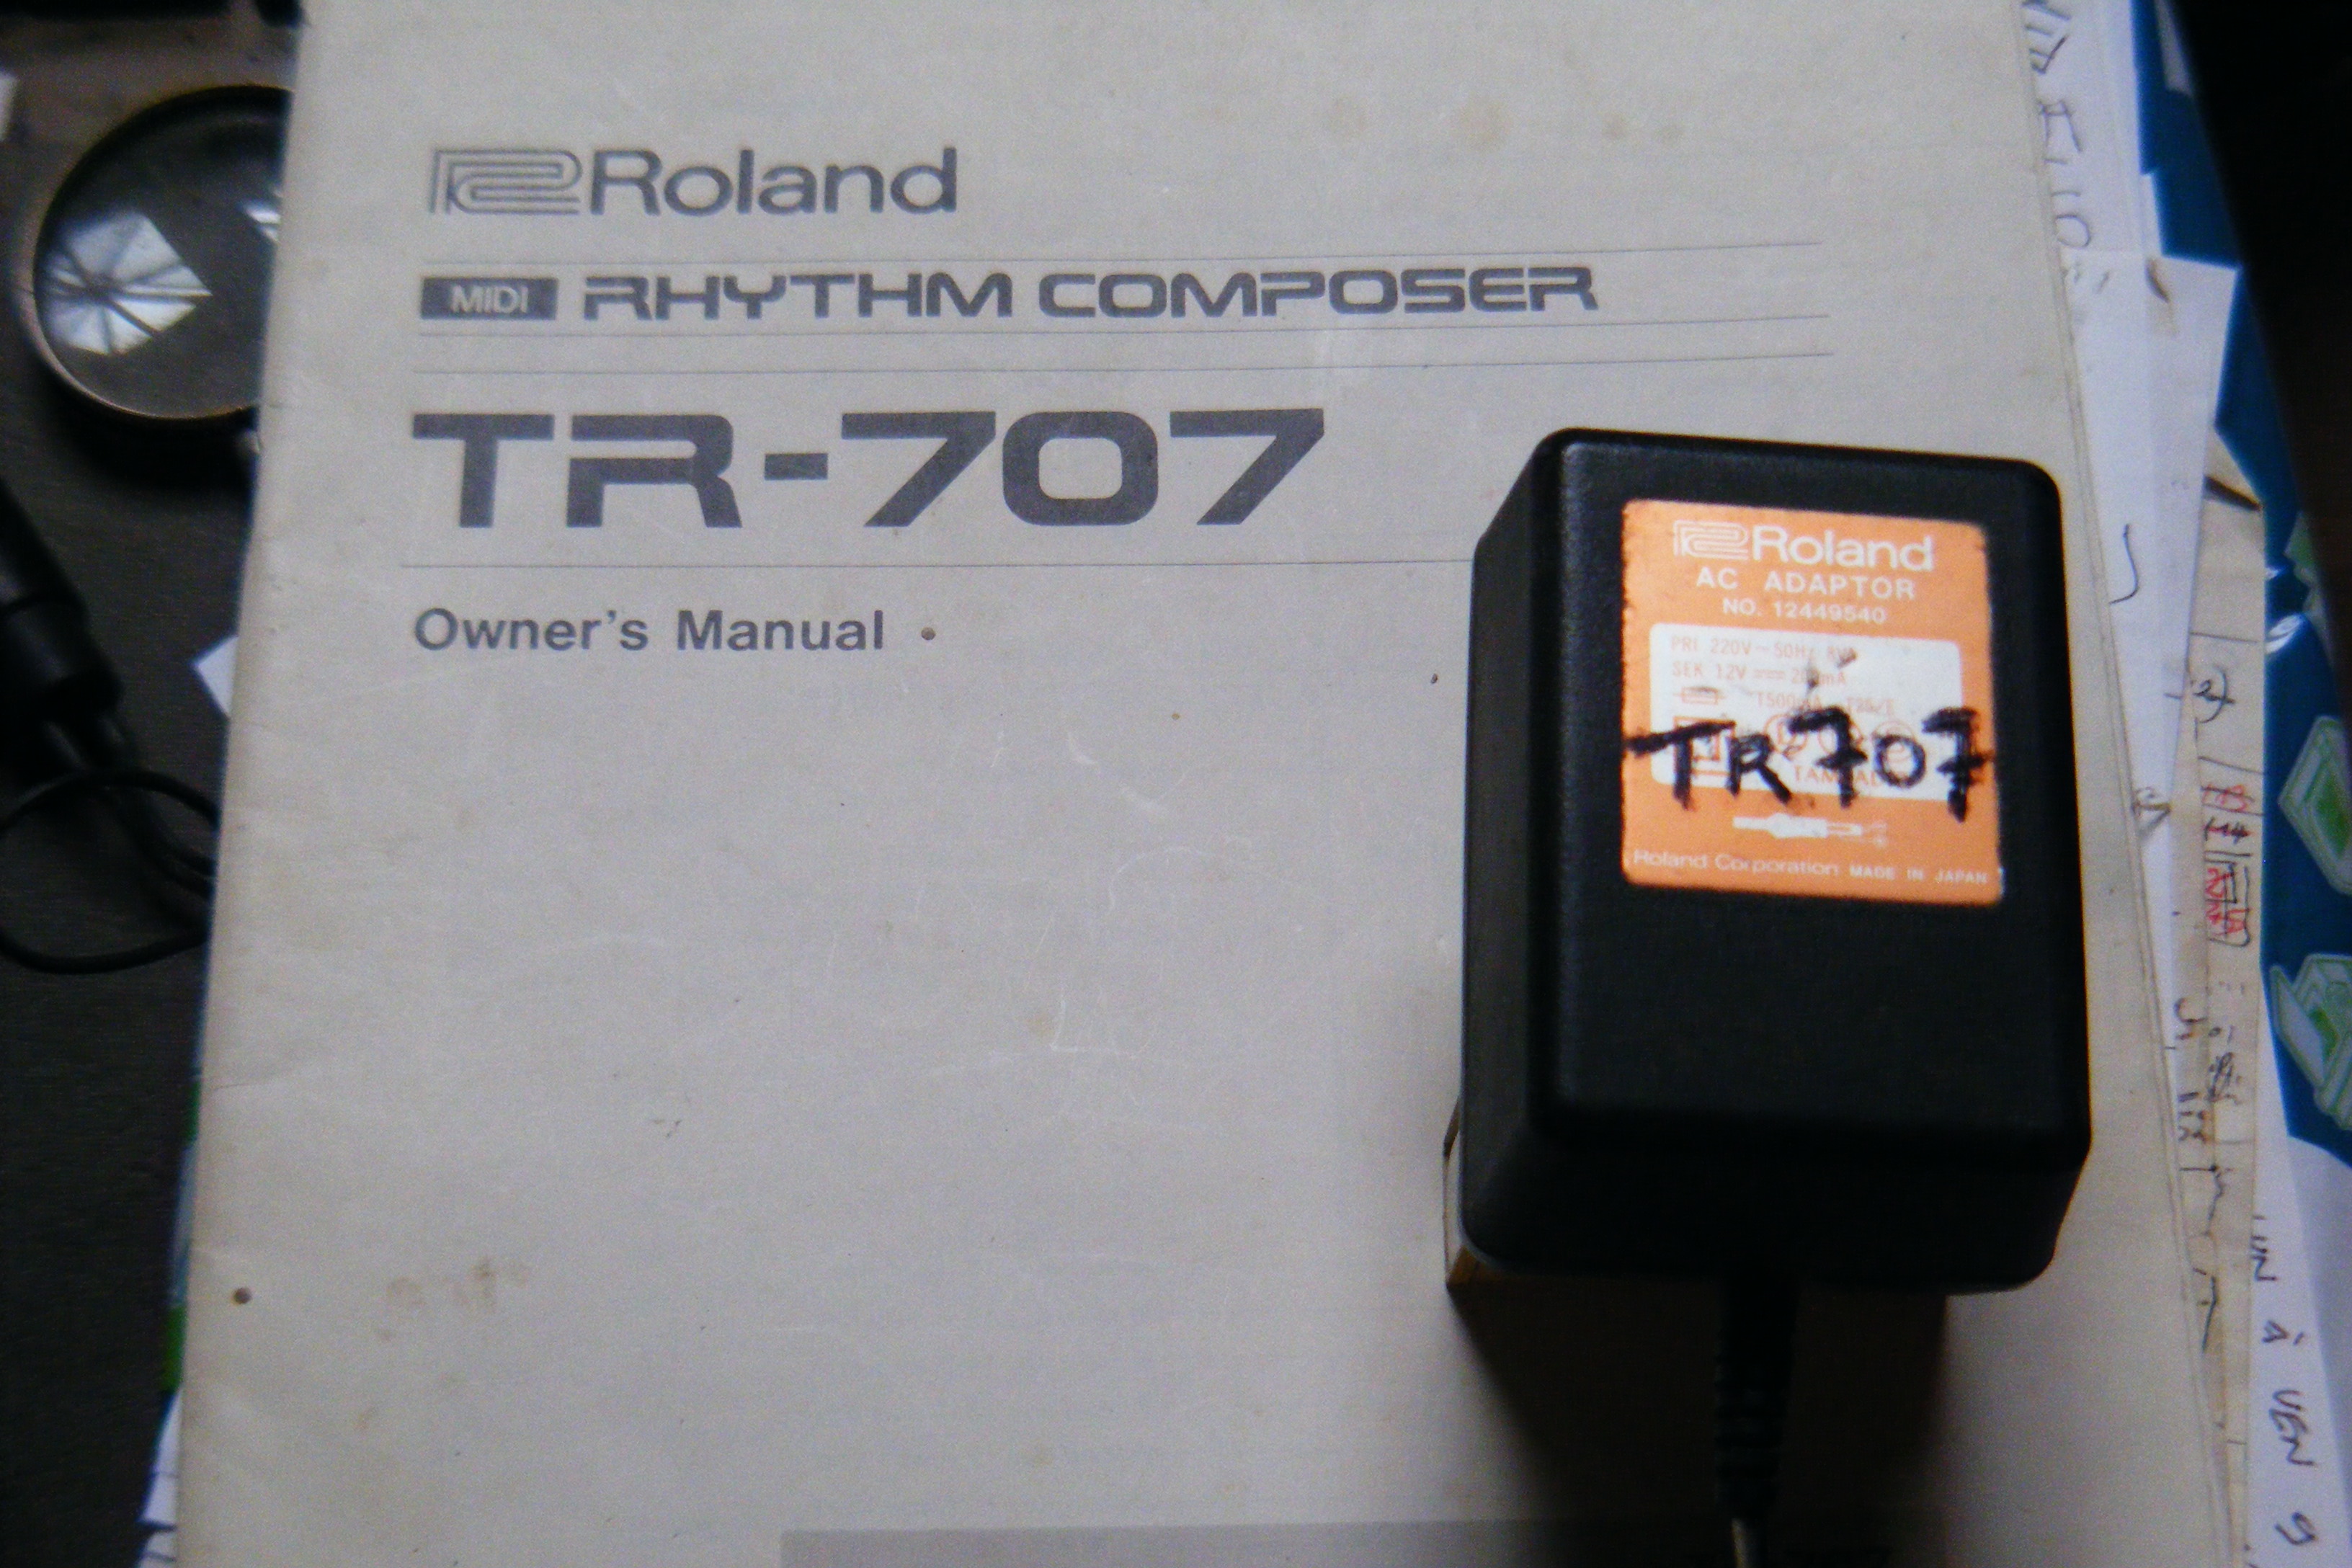 Roland TR-707 image (#1799916) - Audiofanzine